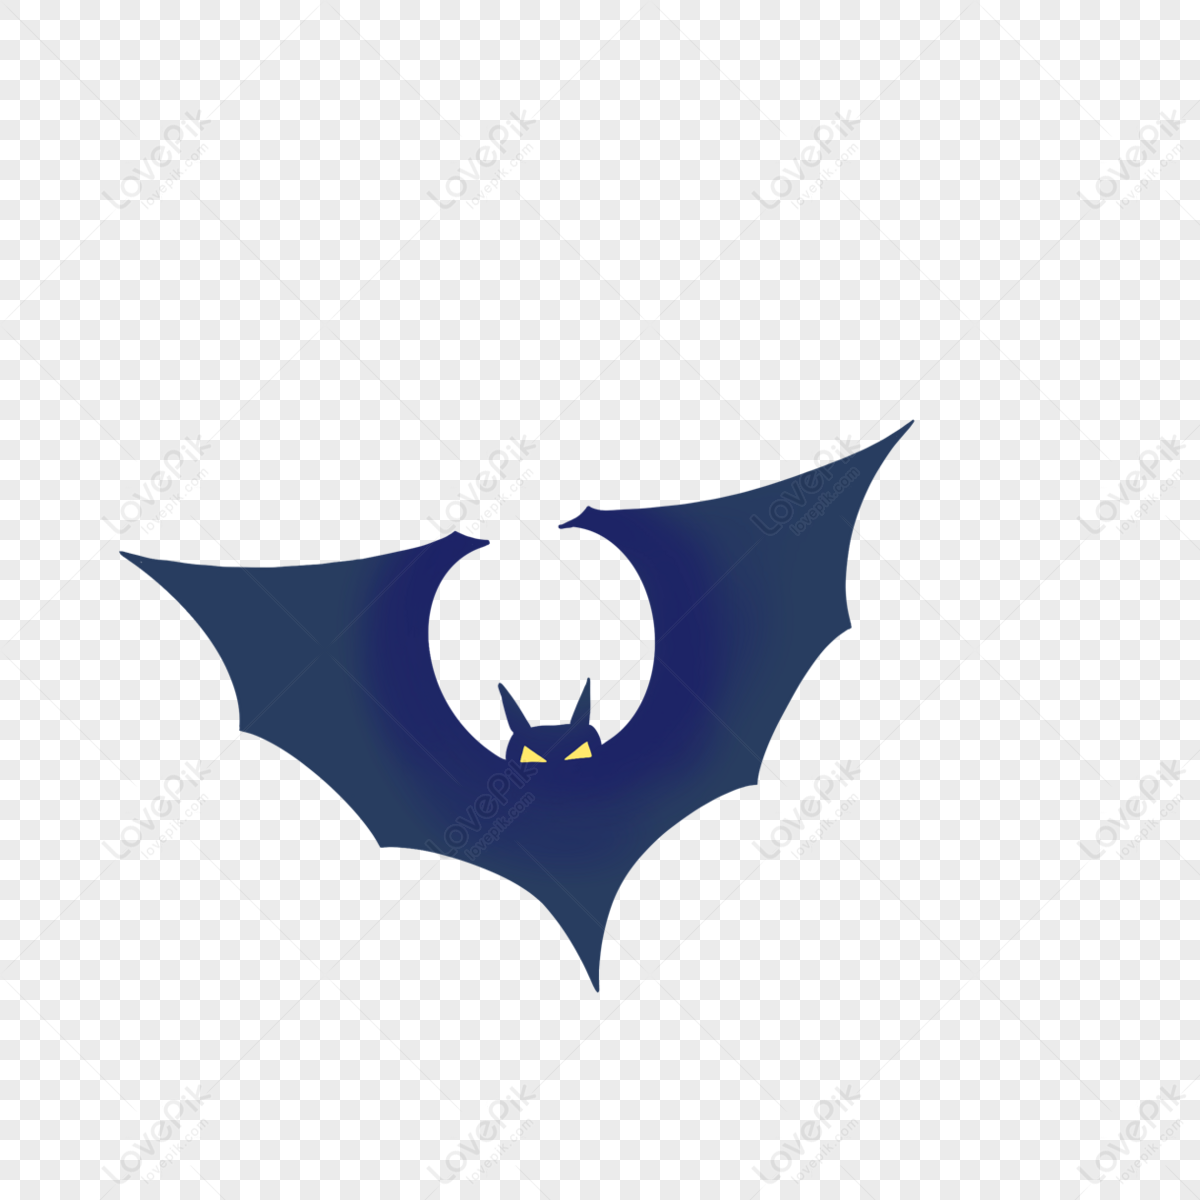 Dark knight logo mascot Royalty Free Vector Image